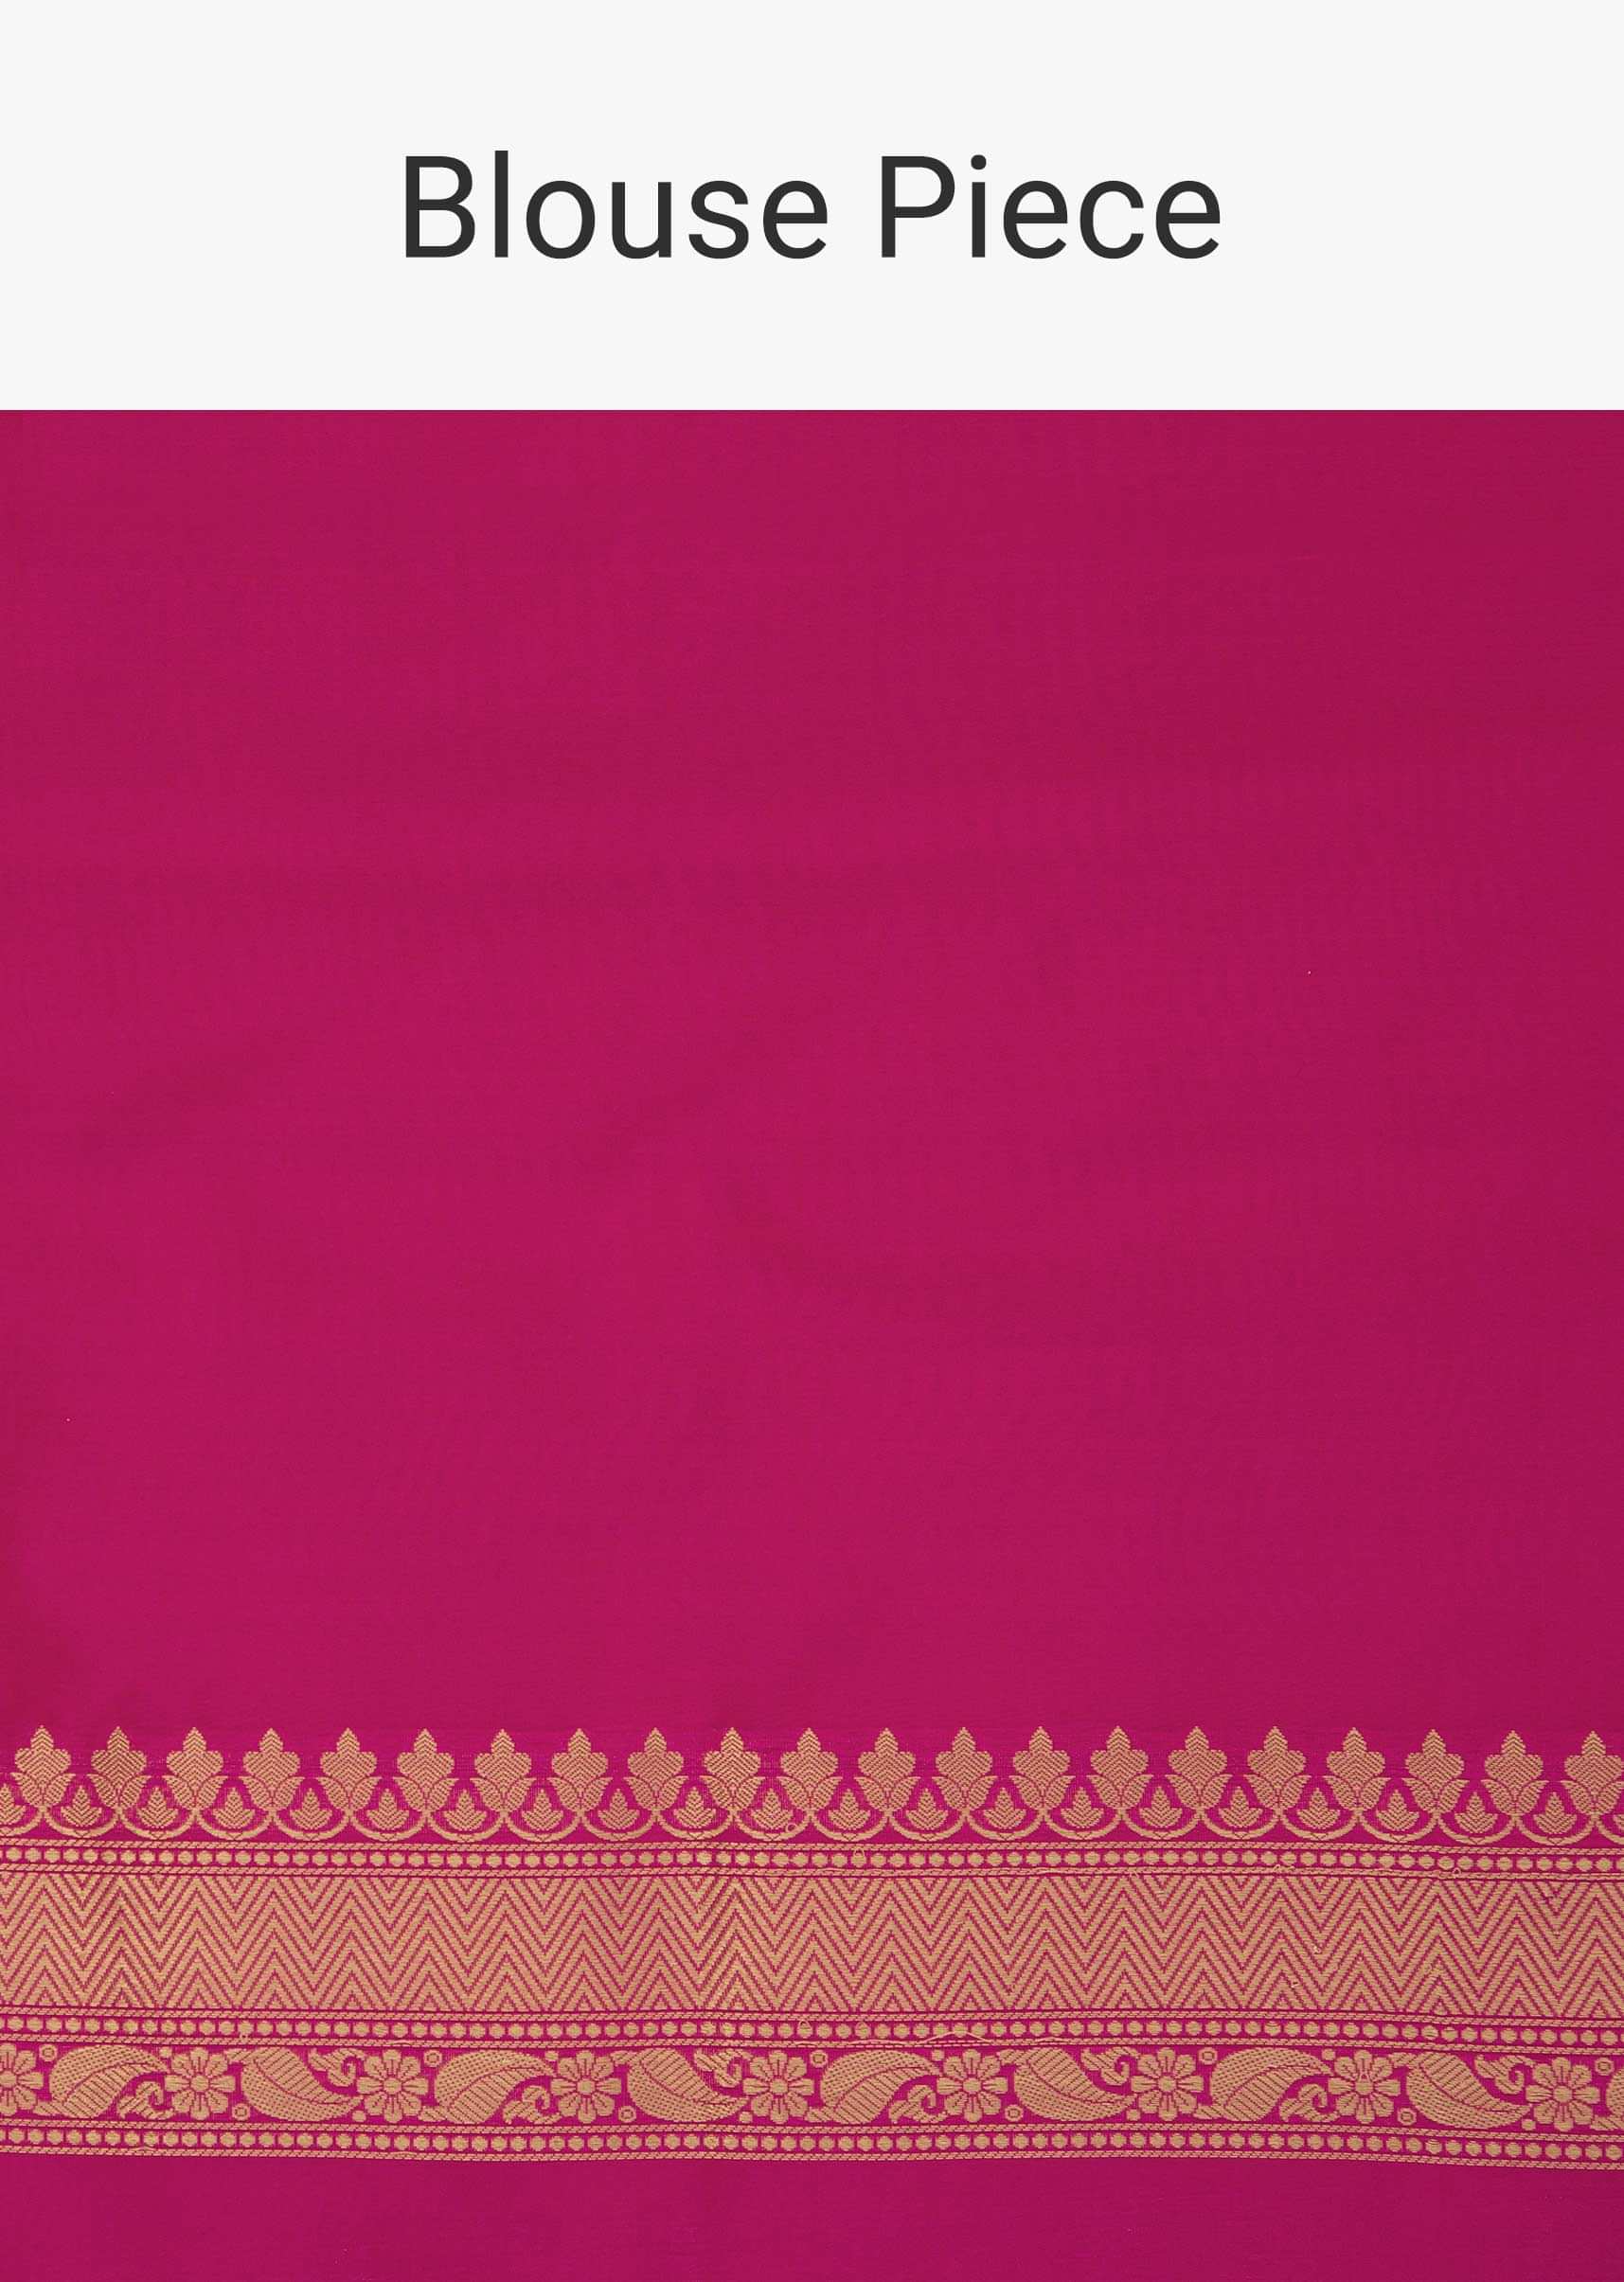 Rani pink Banarasi silk saree with brocade butti and borde